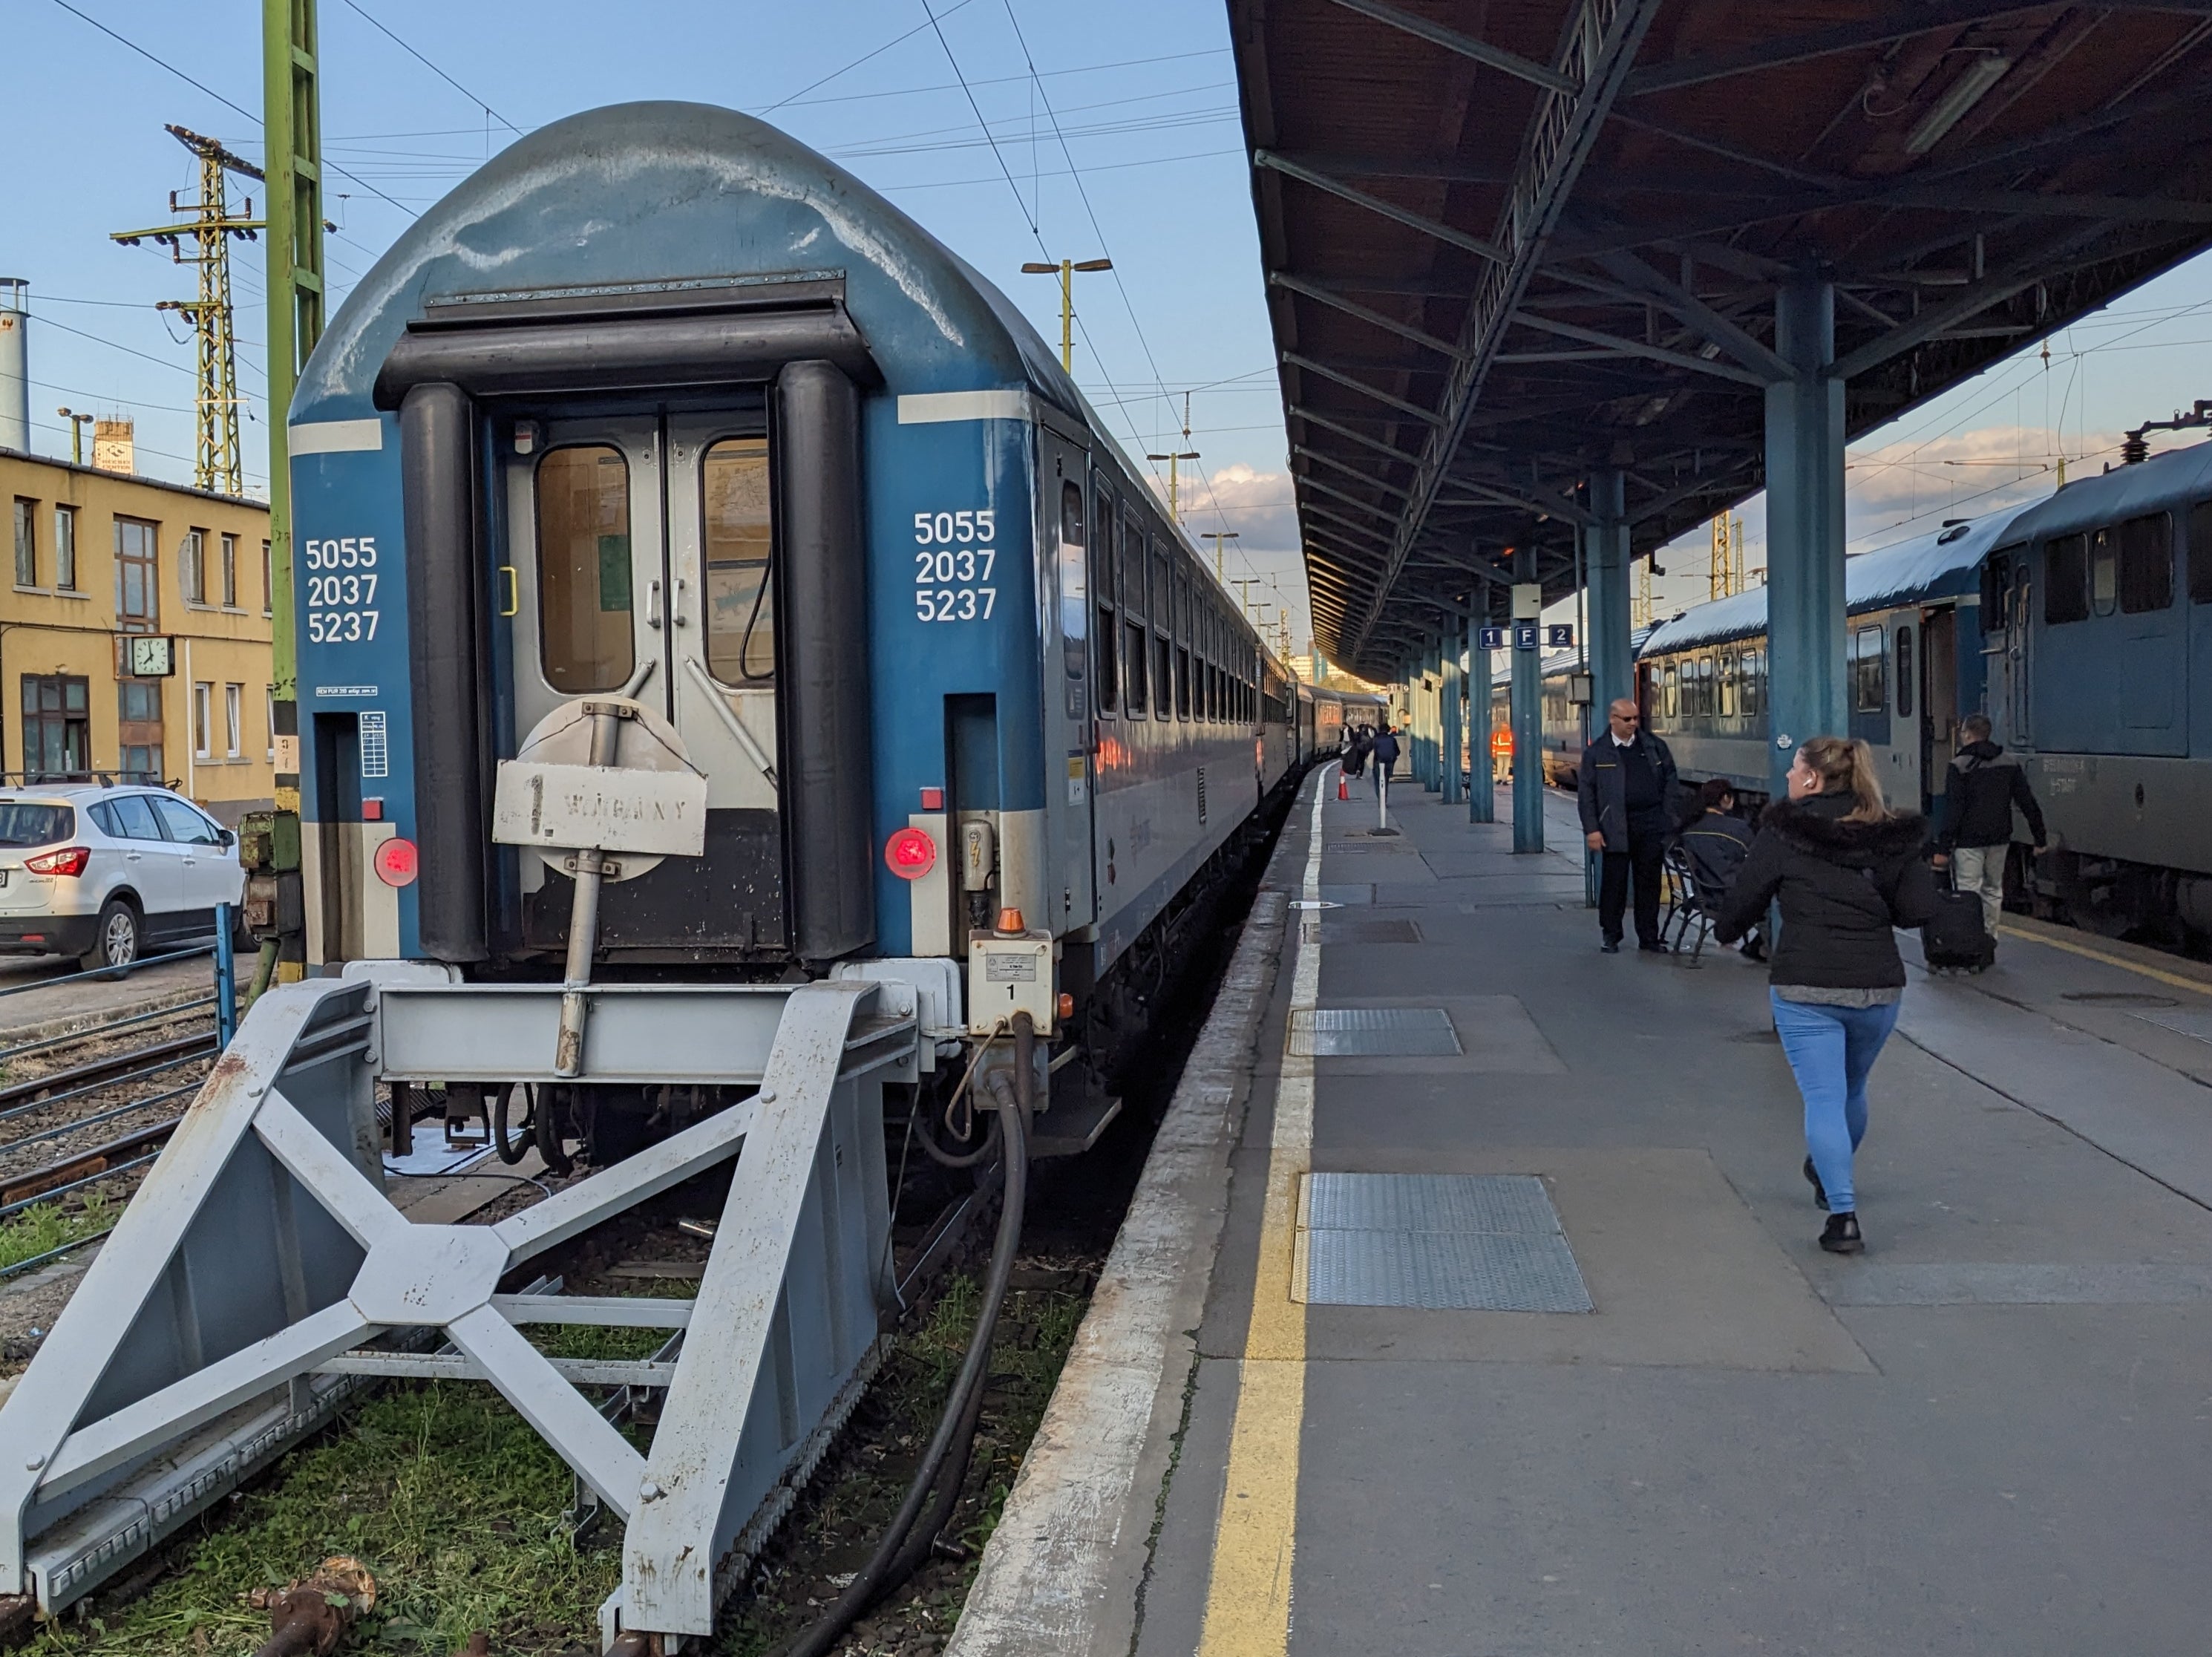 Last leg: The sleeper train to Brasov